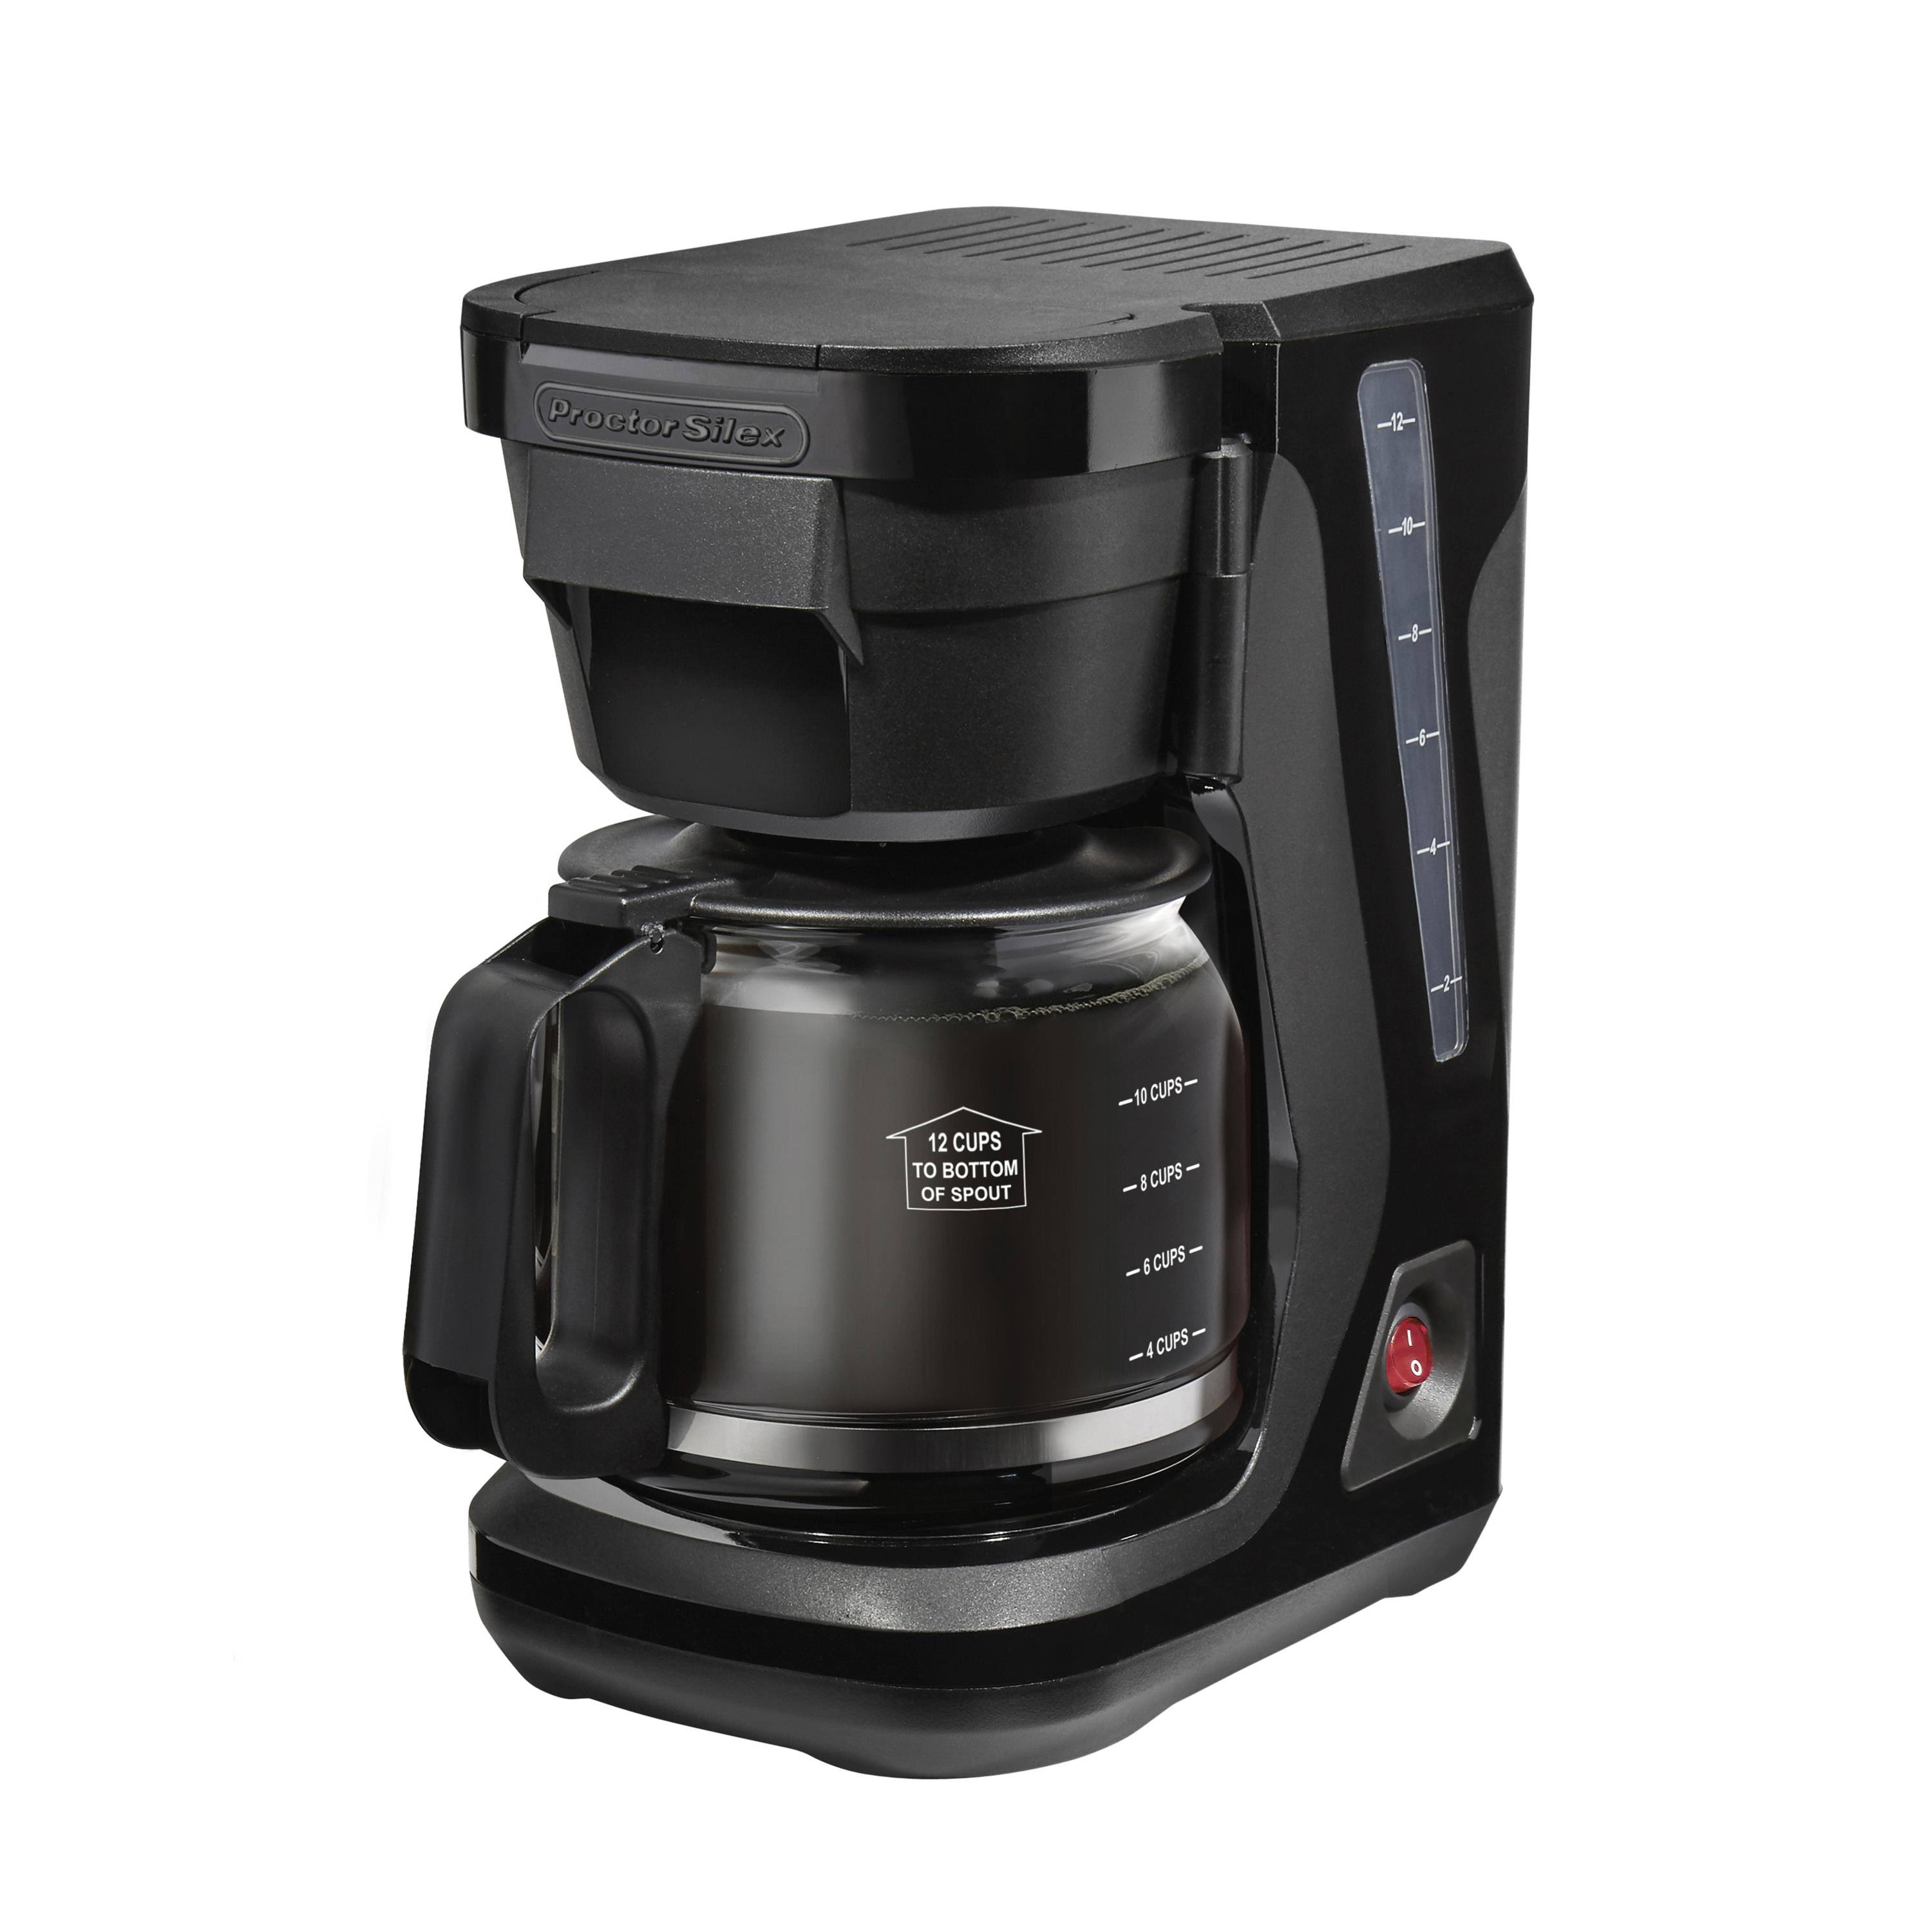 Proctor Silex Programmable Coffee Maker - Black, 12 Cup